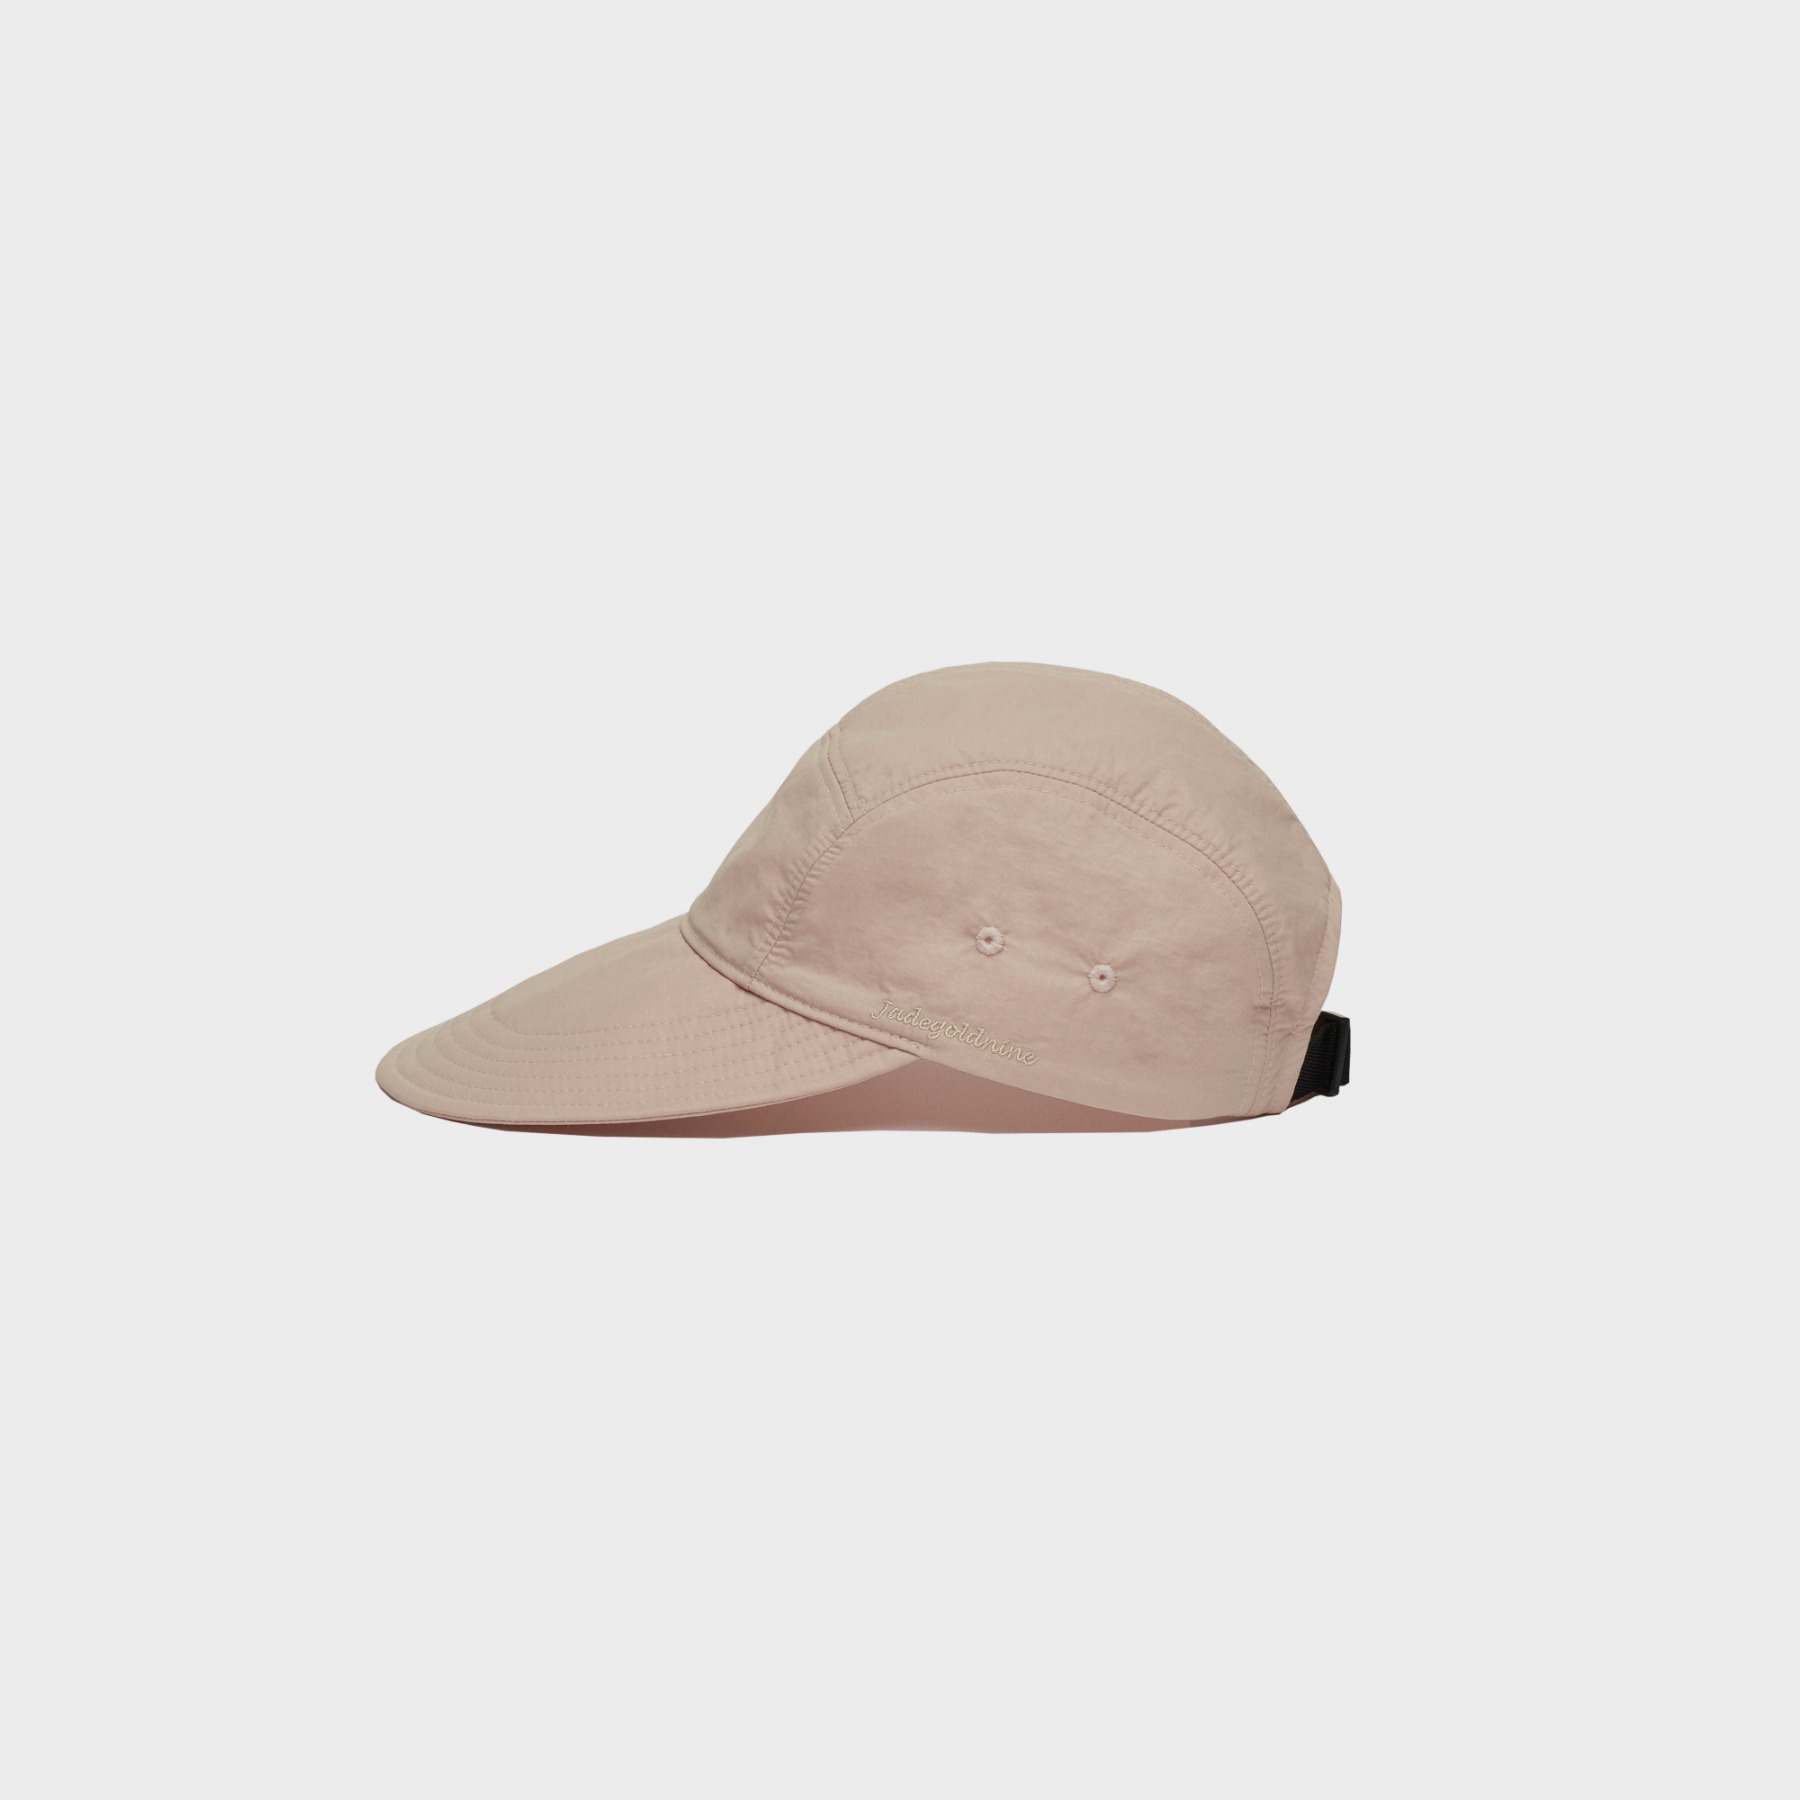 Summer campcap(pink)